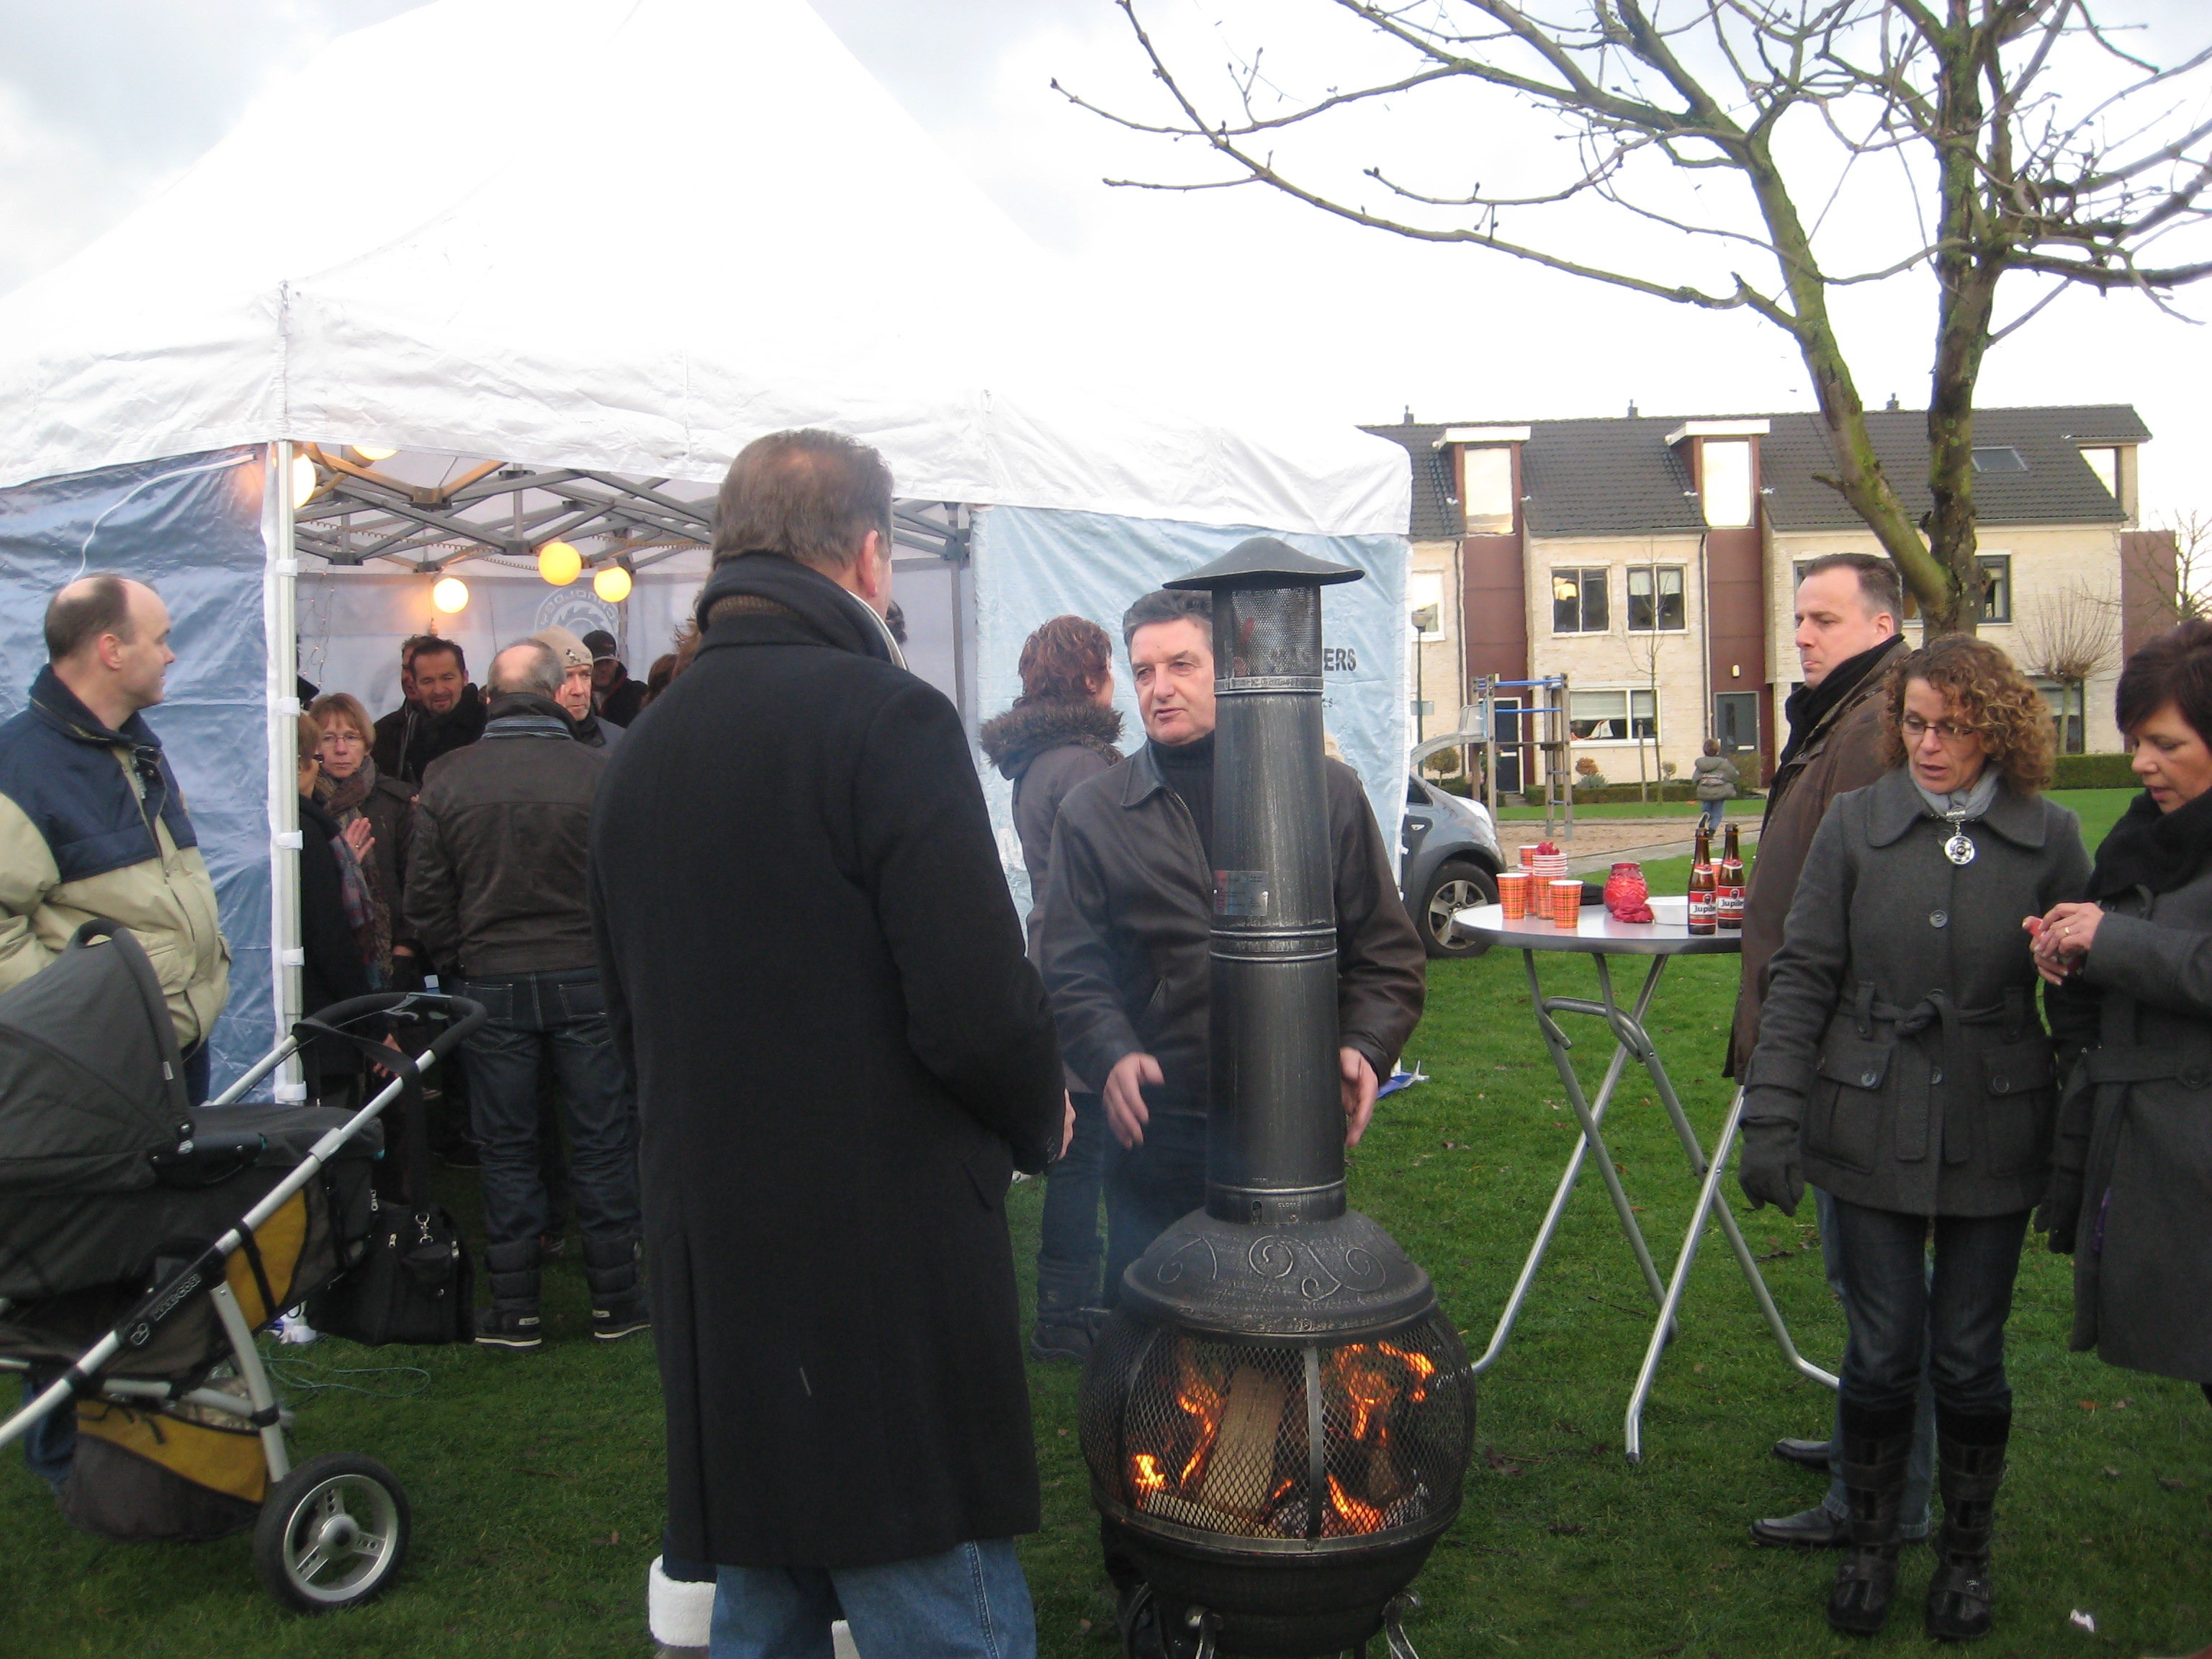 Gallery: 2011 - Winter buurtfeest